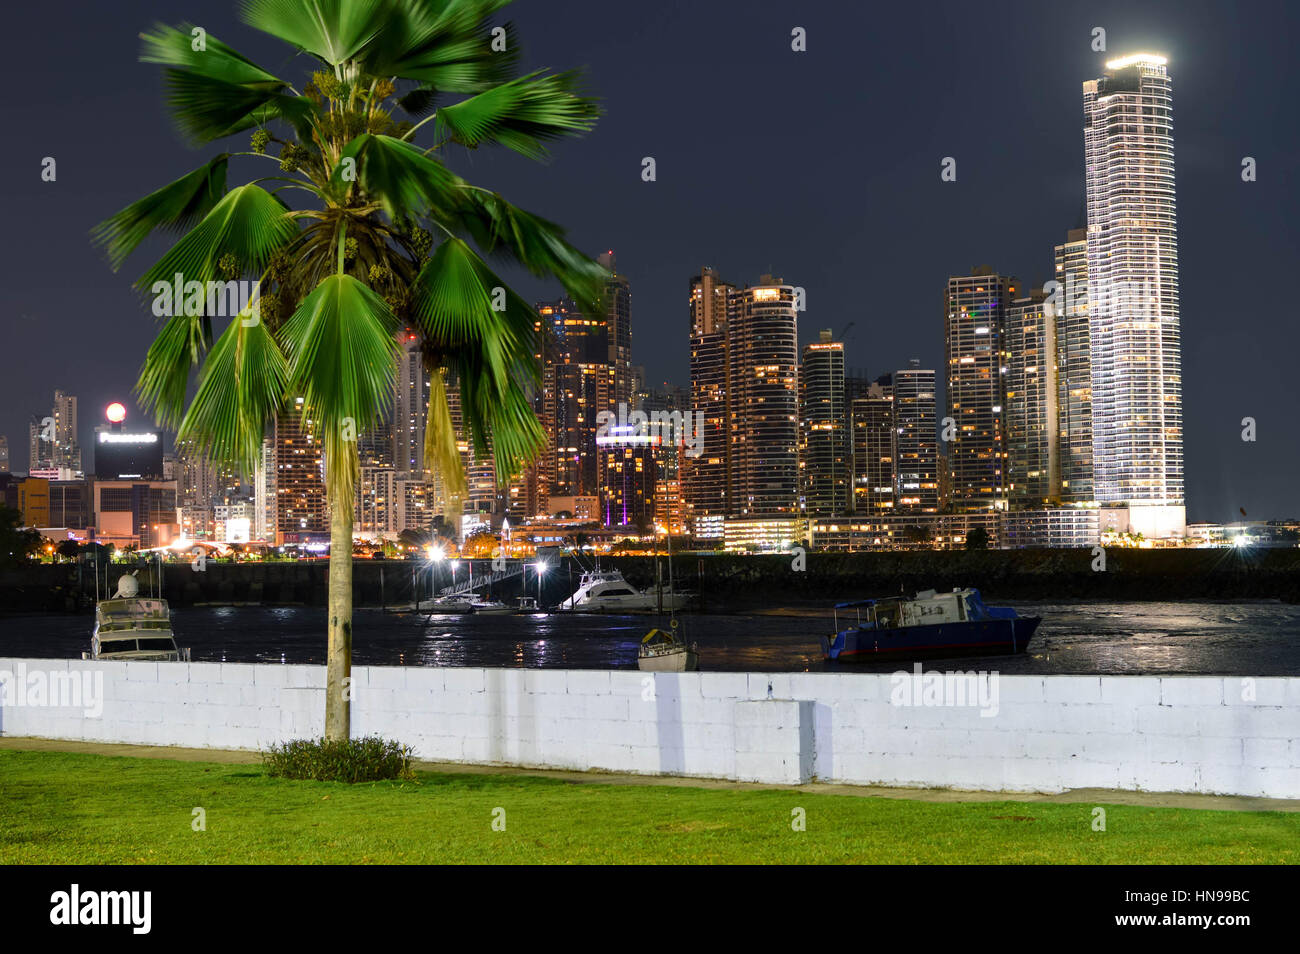 Panama City, Panama - August 29, 2015: Panama city skyline is seen at night on August 29, 2015 in Panama, Central America. Stock Photo